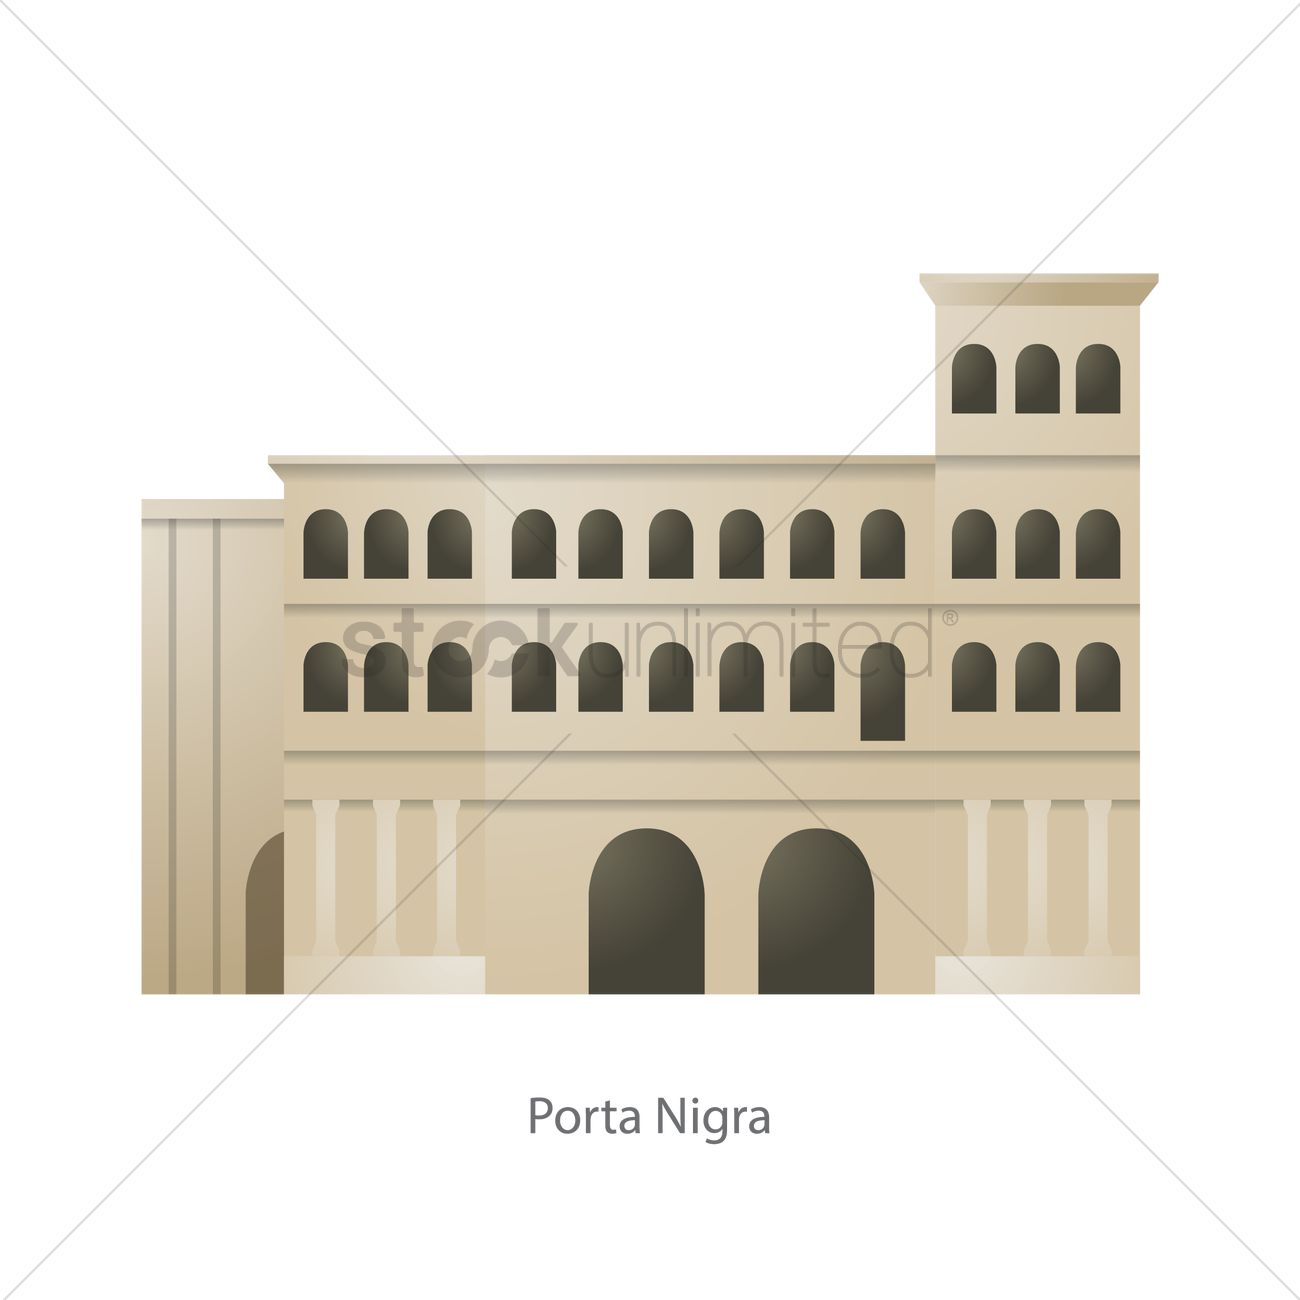 Porta nigra Vector Image.